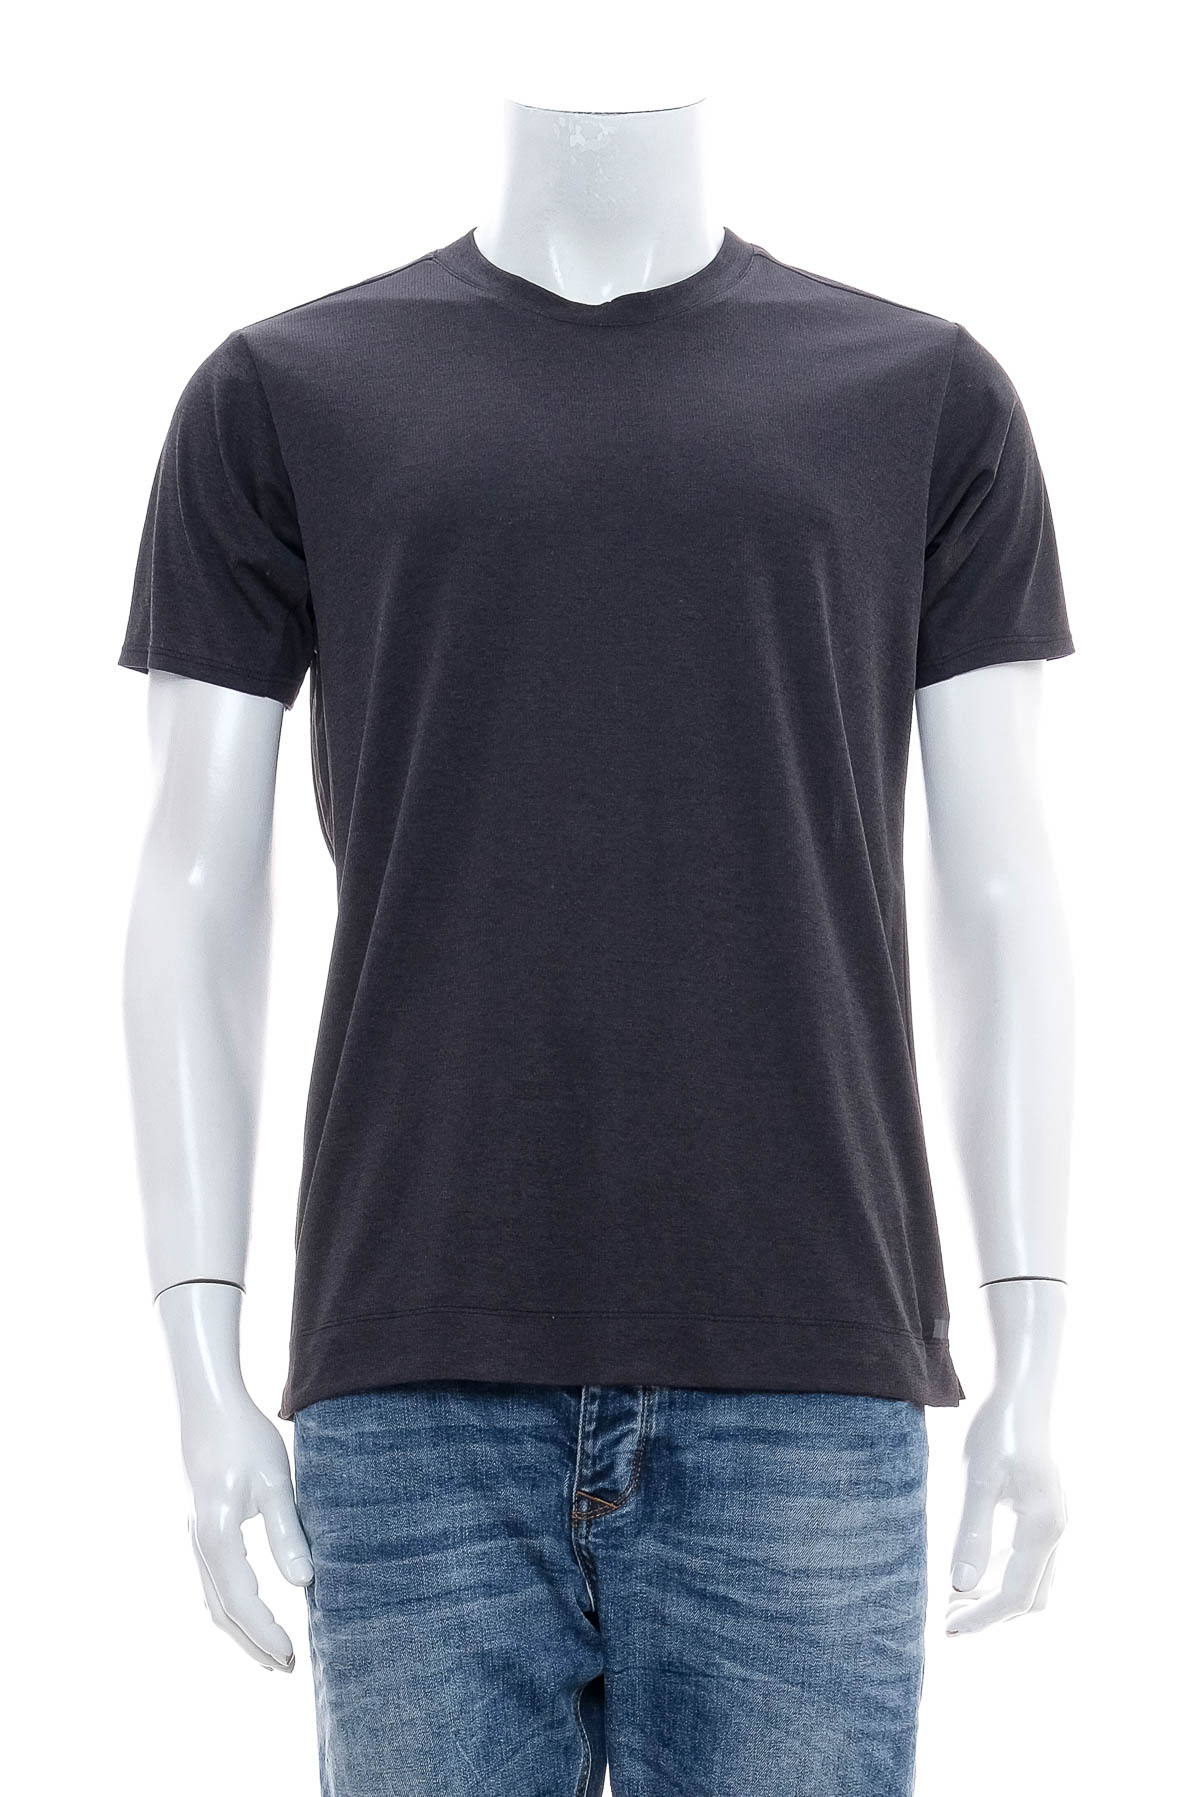 Men's T-shirt - Adidas climachill - 0